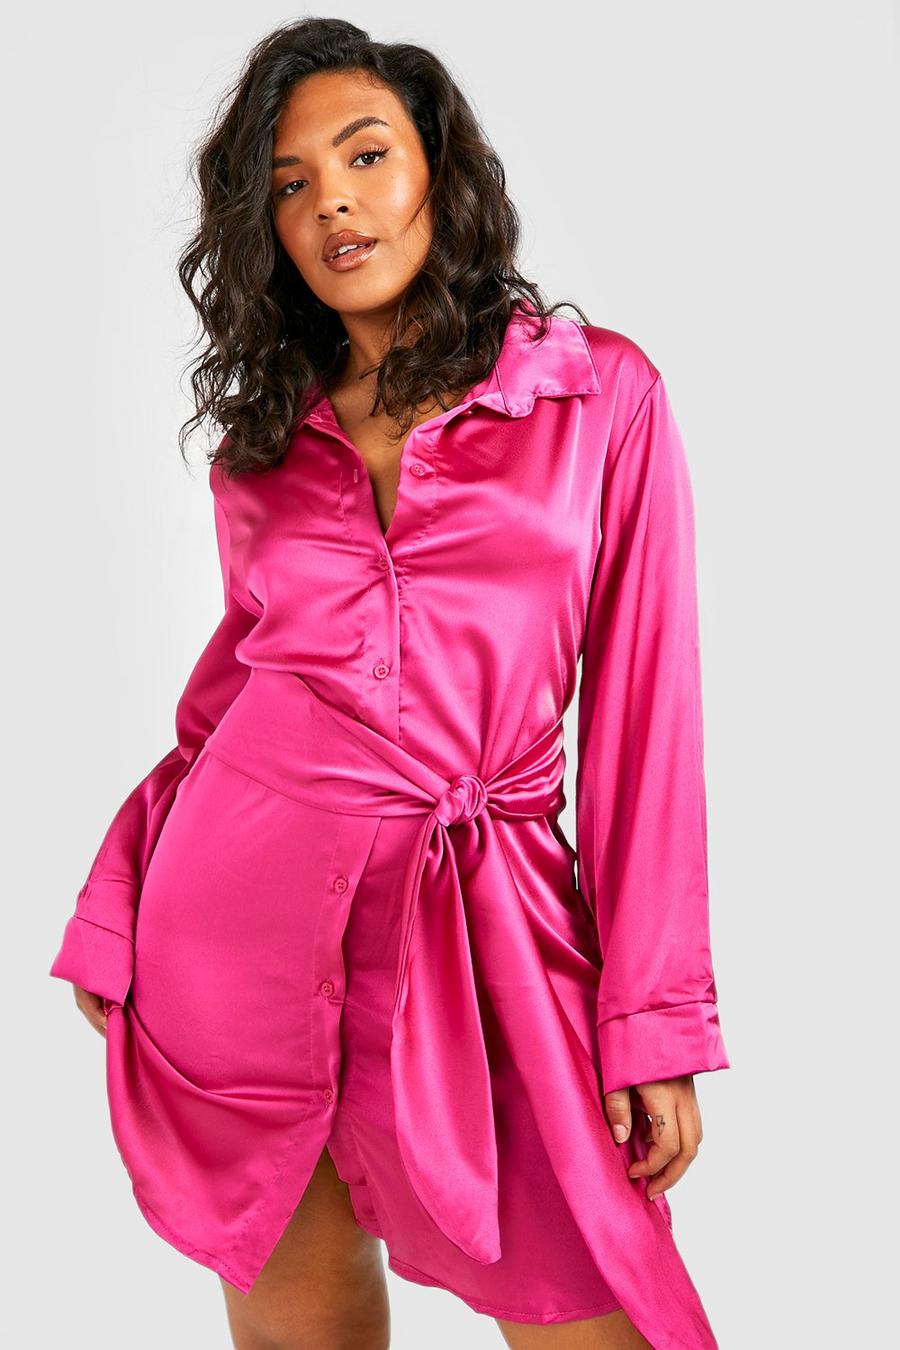 Plus Wickel Hemd-Kleid aus Satin, Hot pink